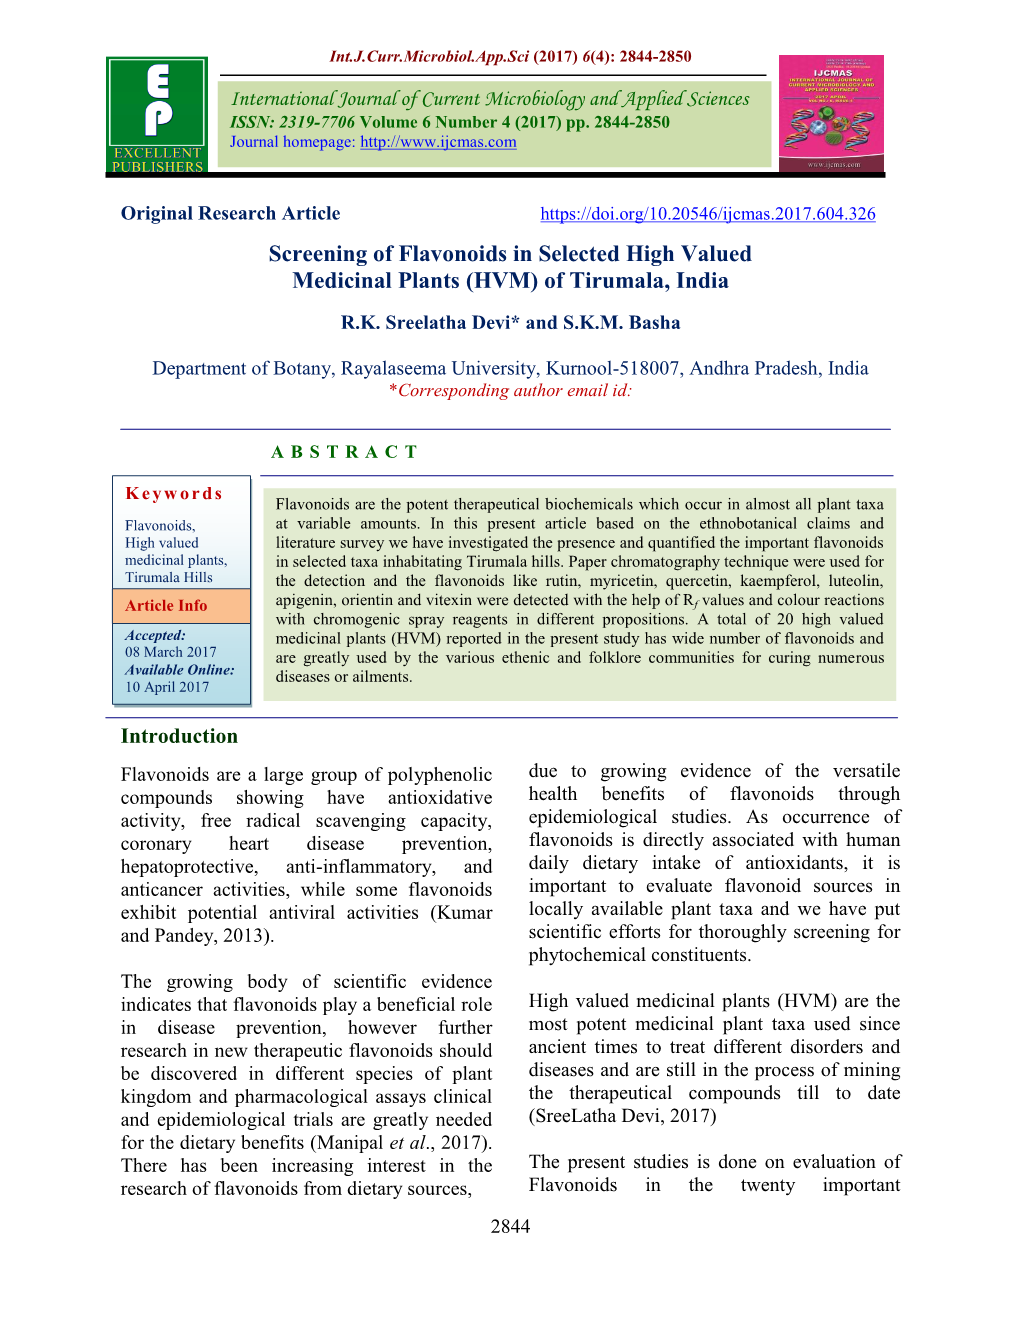 Screening of Flavonoids in Selected High Valued Medicinal Plants (HVM) of Tirumala, India